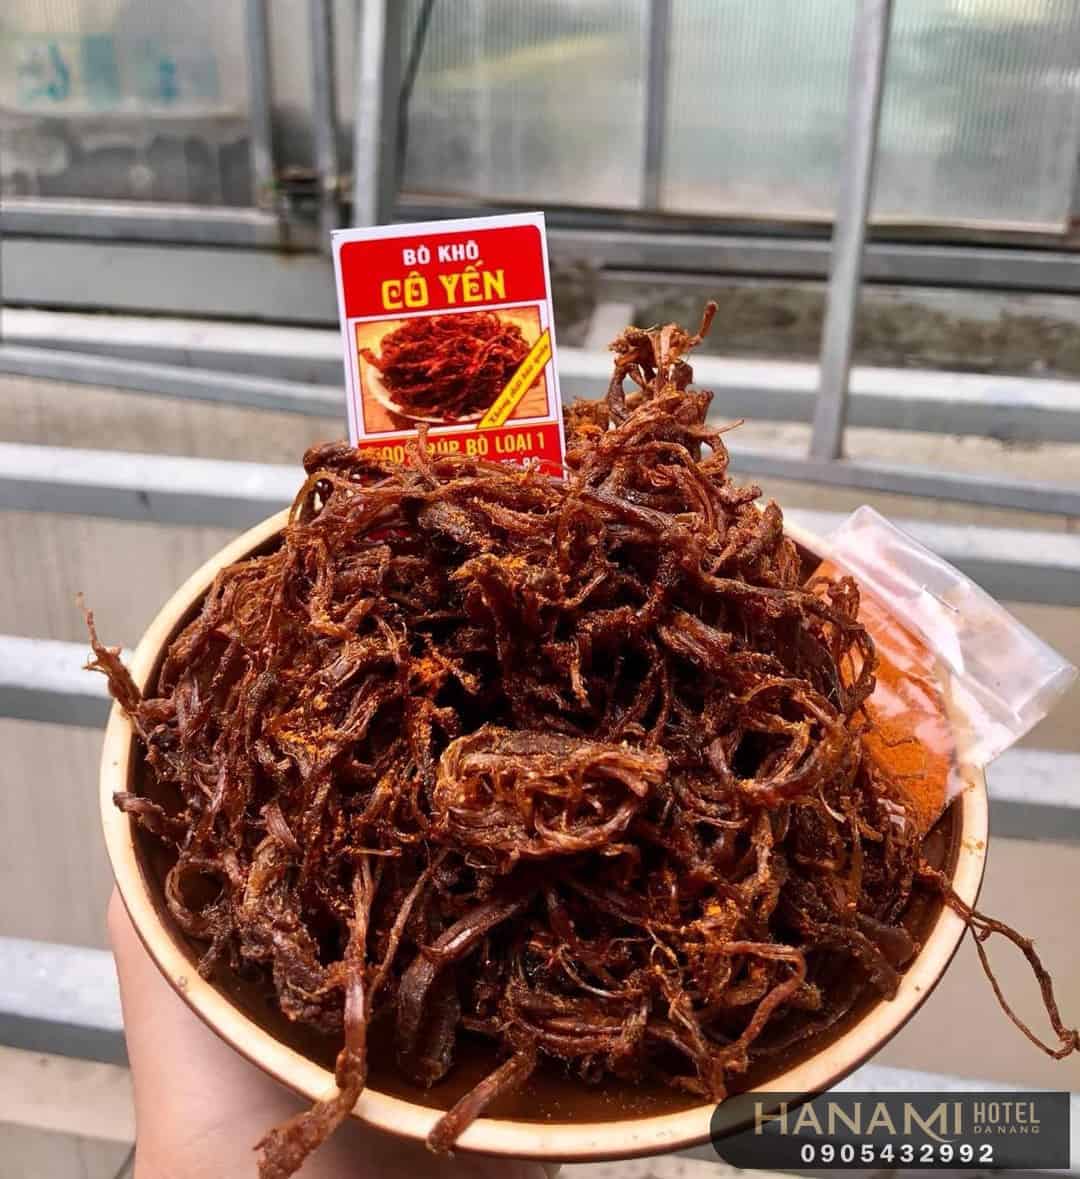 best addresses to buy beef jerky in da nang